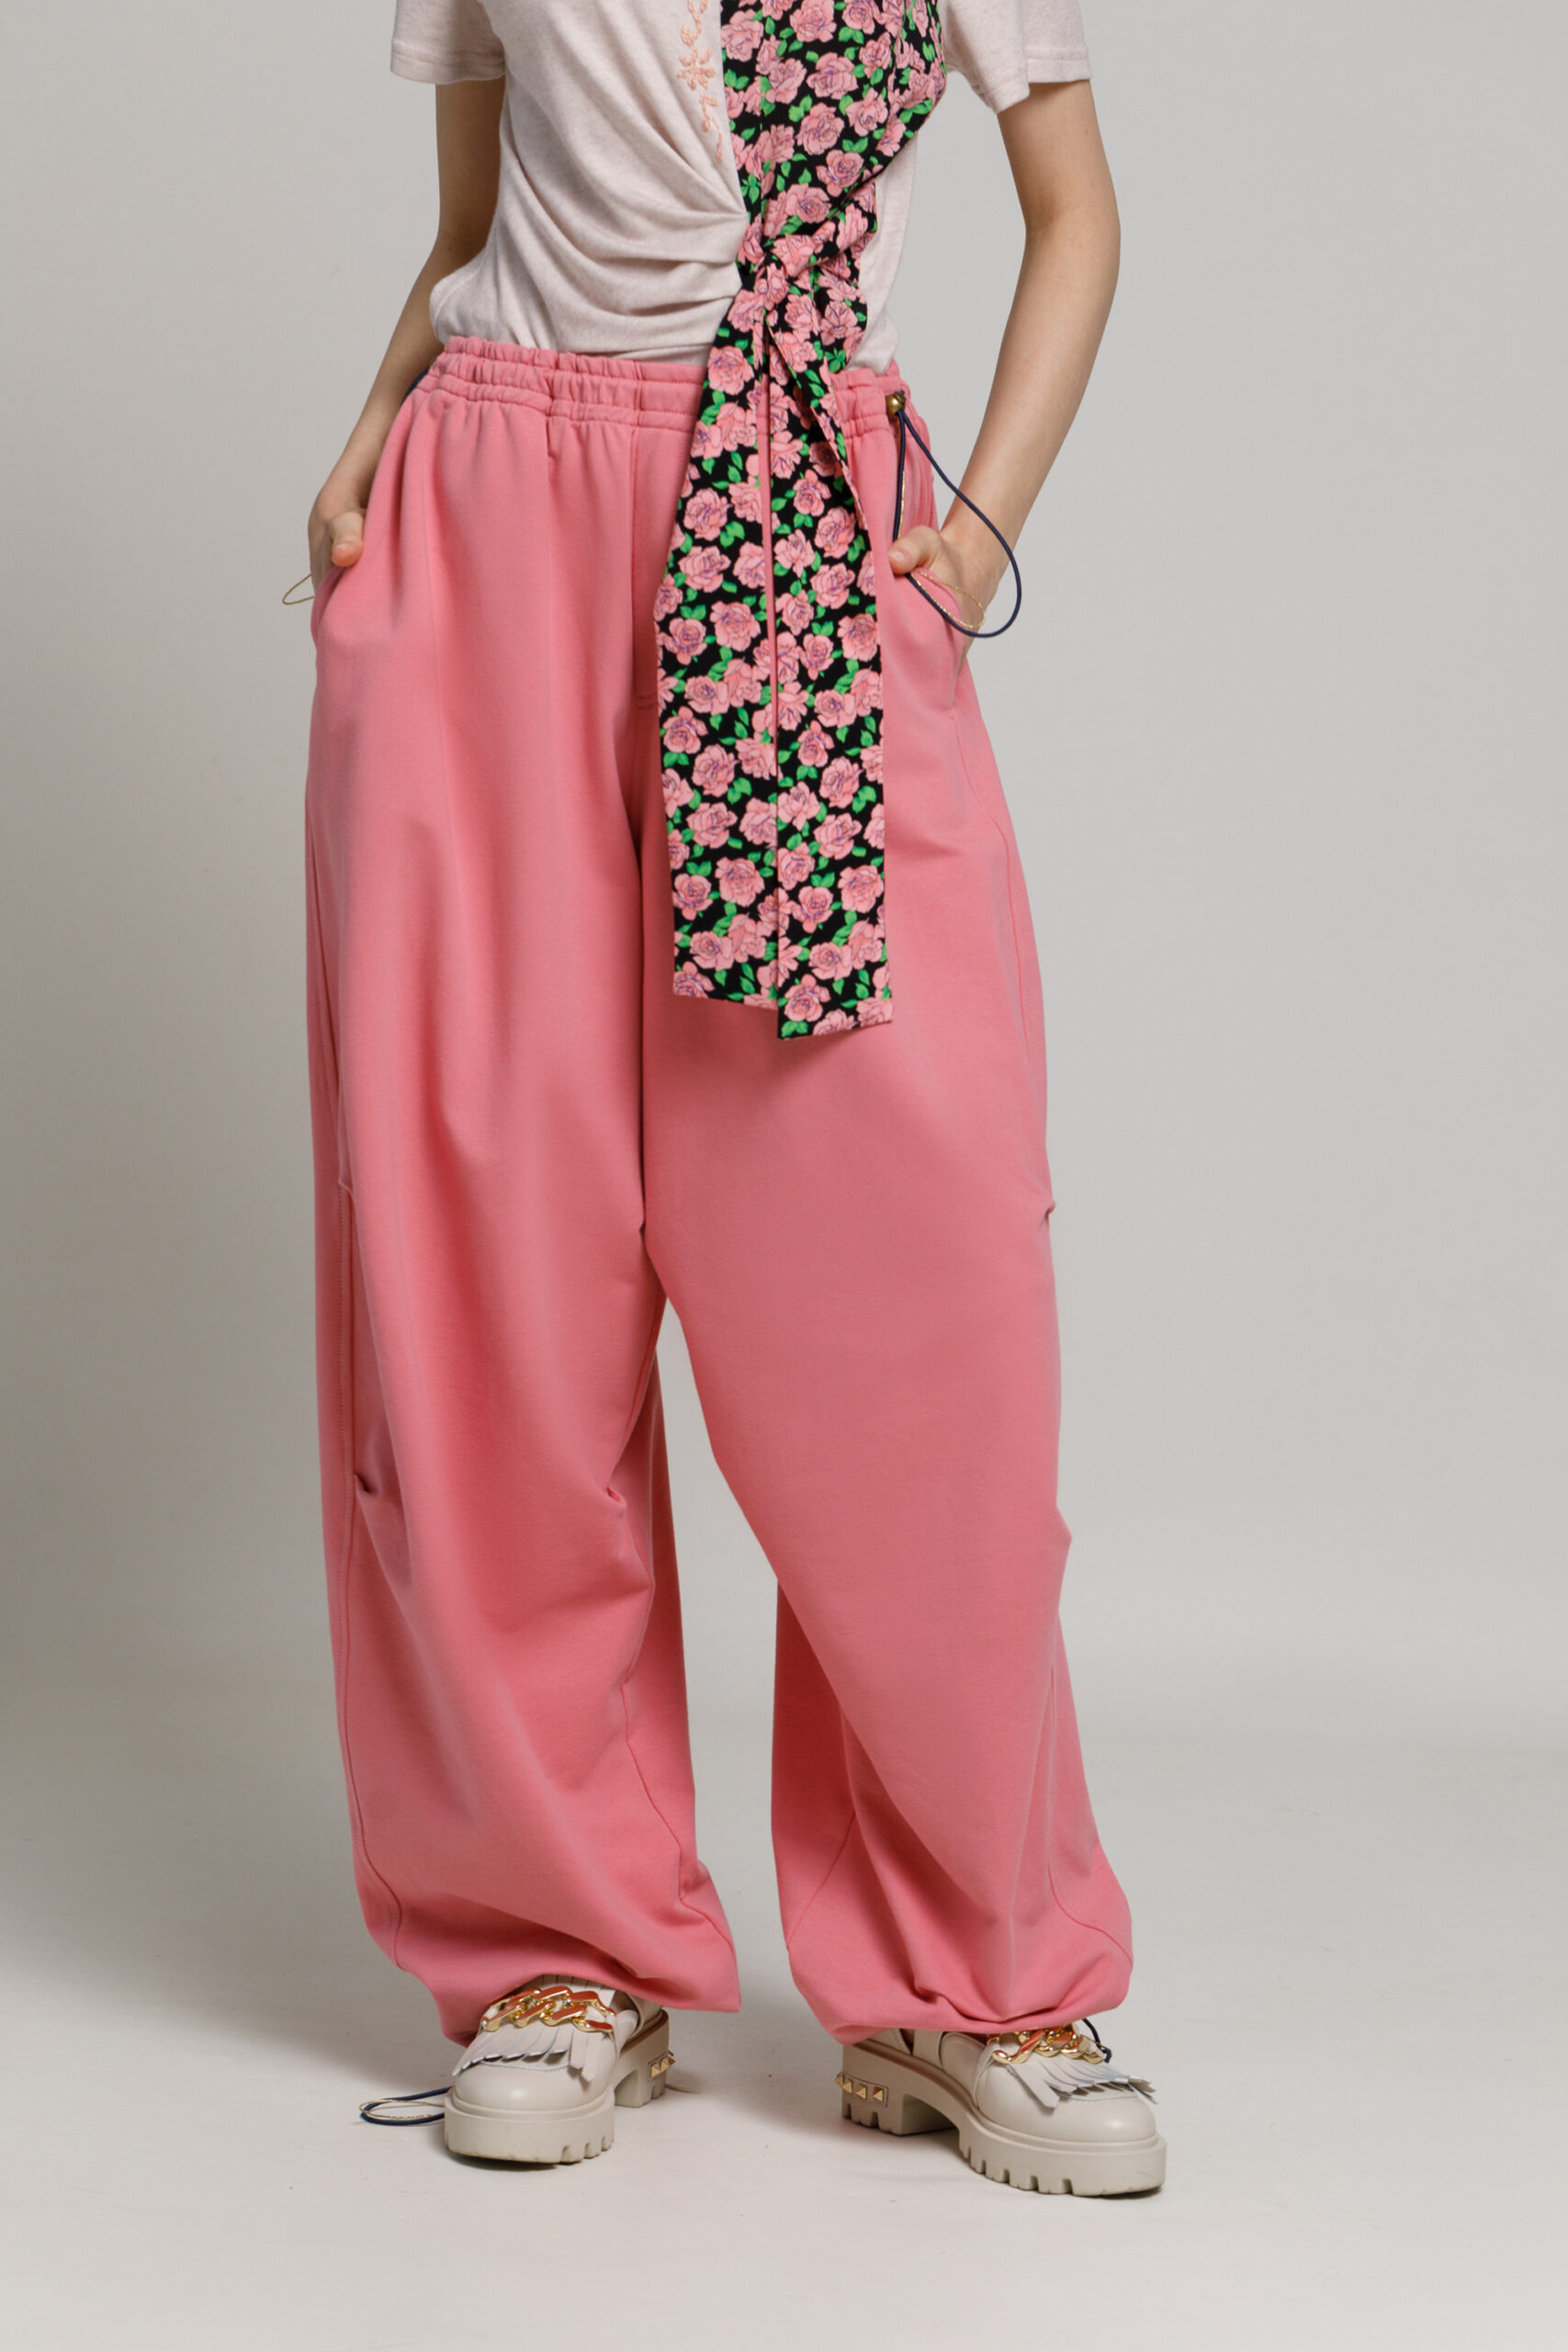 Pantalon  WAN roz din felpa. Materiale naturale, design unicat, cu broderie si aplicatii handmade